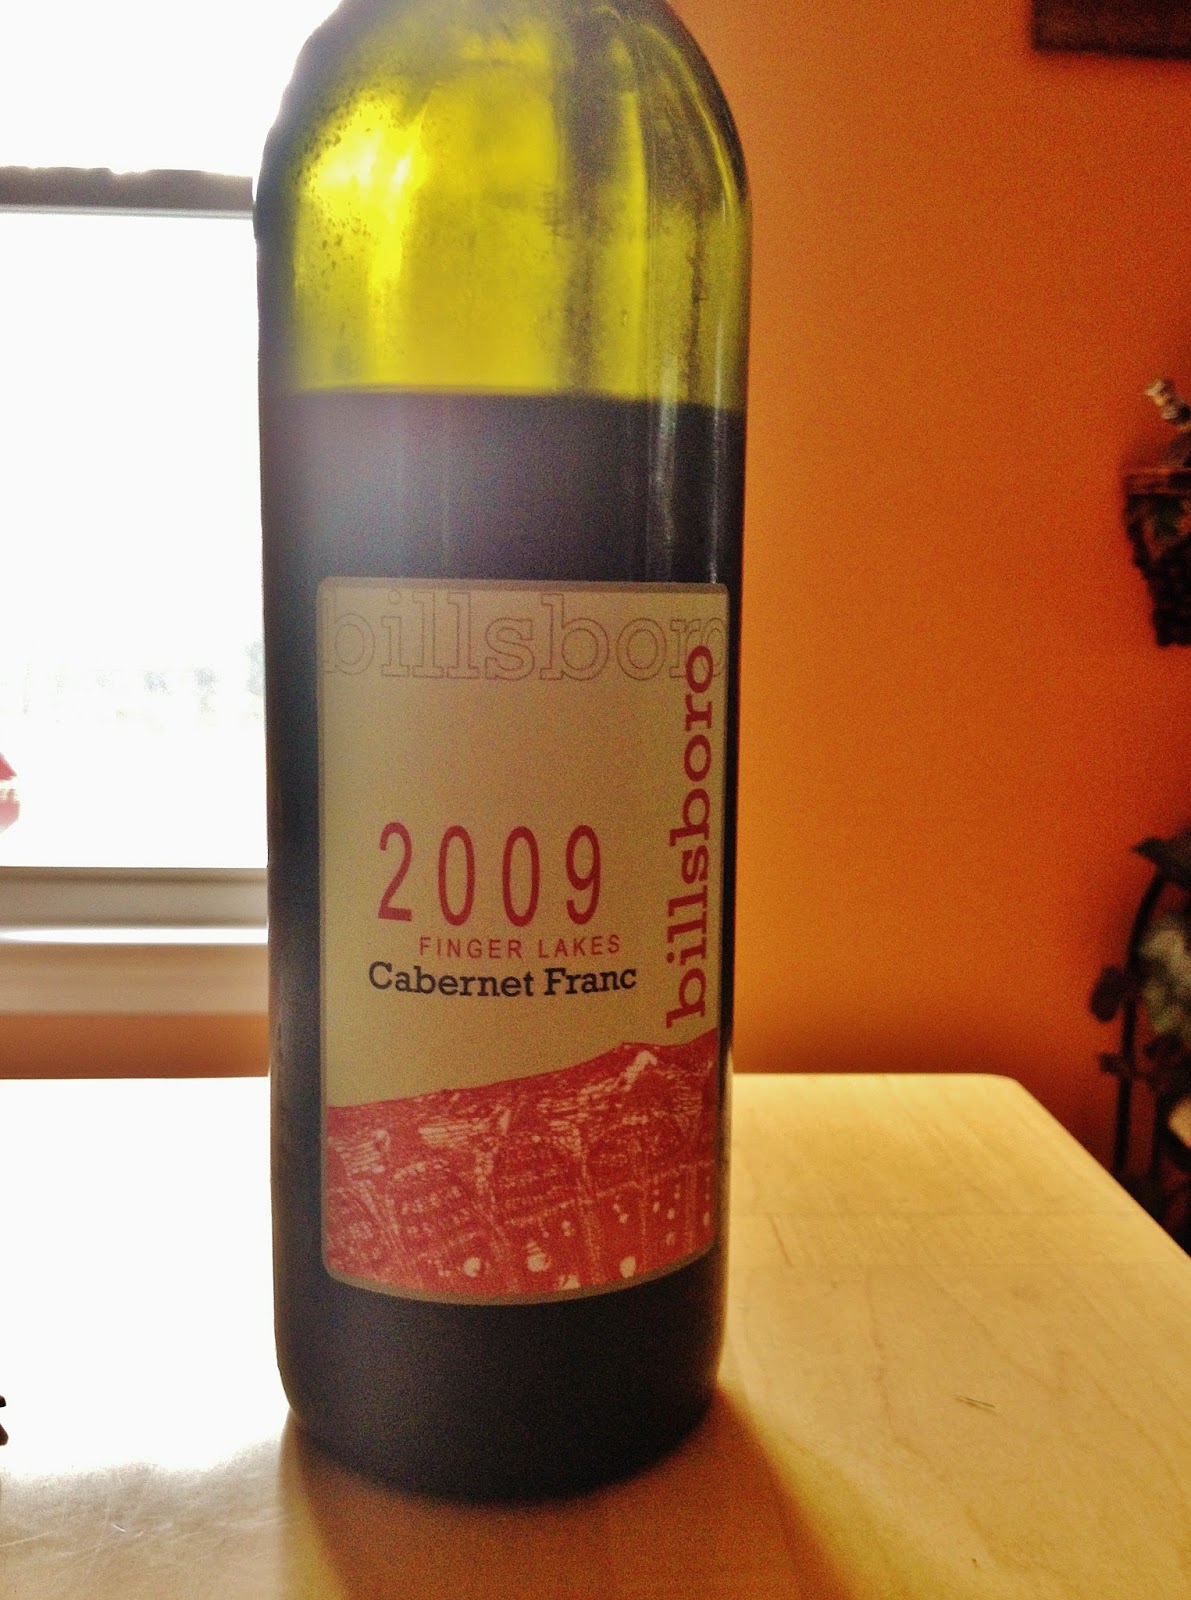 2009 Billsboro winery Cabernet Franc